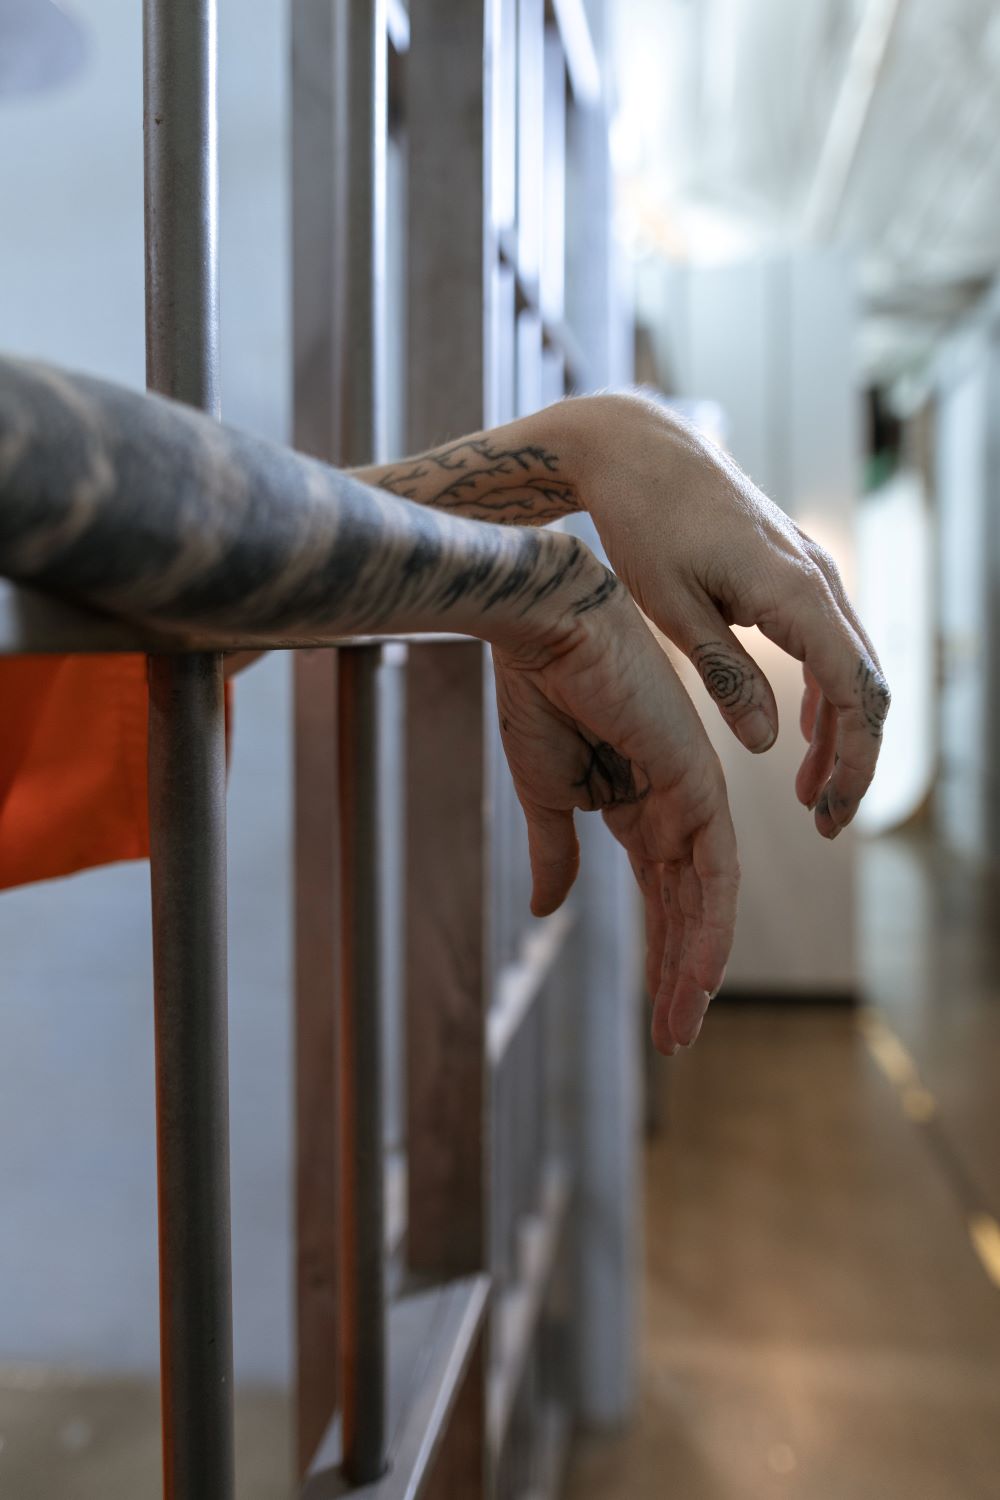 Illinois IDOC Renews Wexford Contract, Undermining Prisoners' Rights